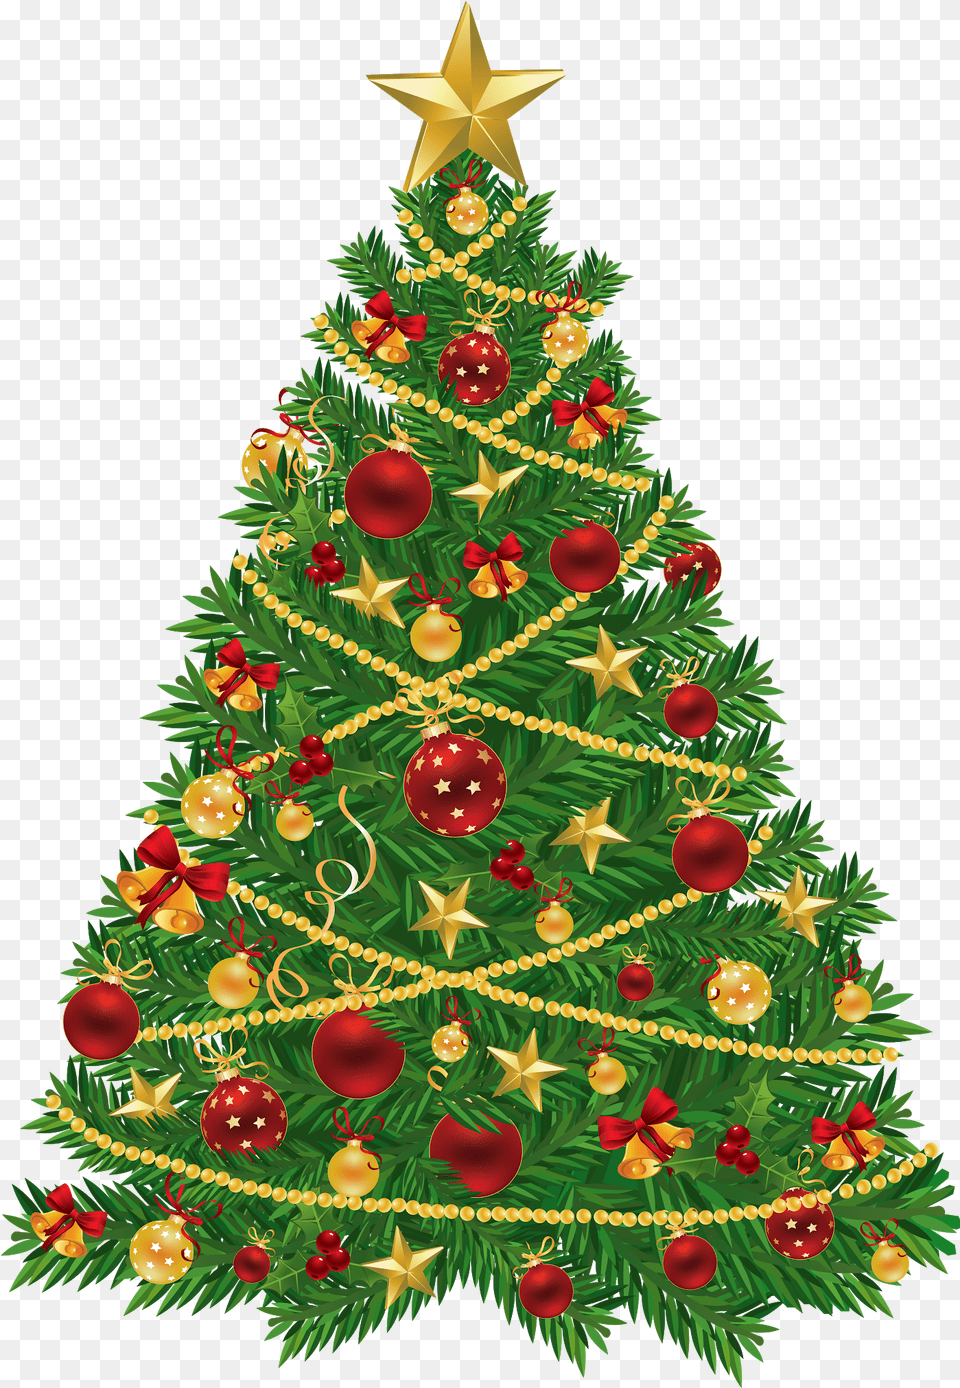 This Image Christmas Tree Transparent, Christmas Decorations, Festival, Plant, Christmas Tree Png